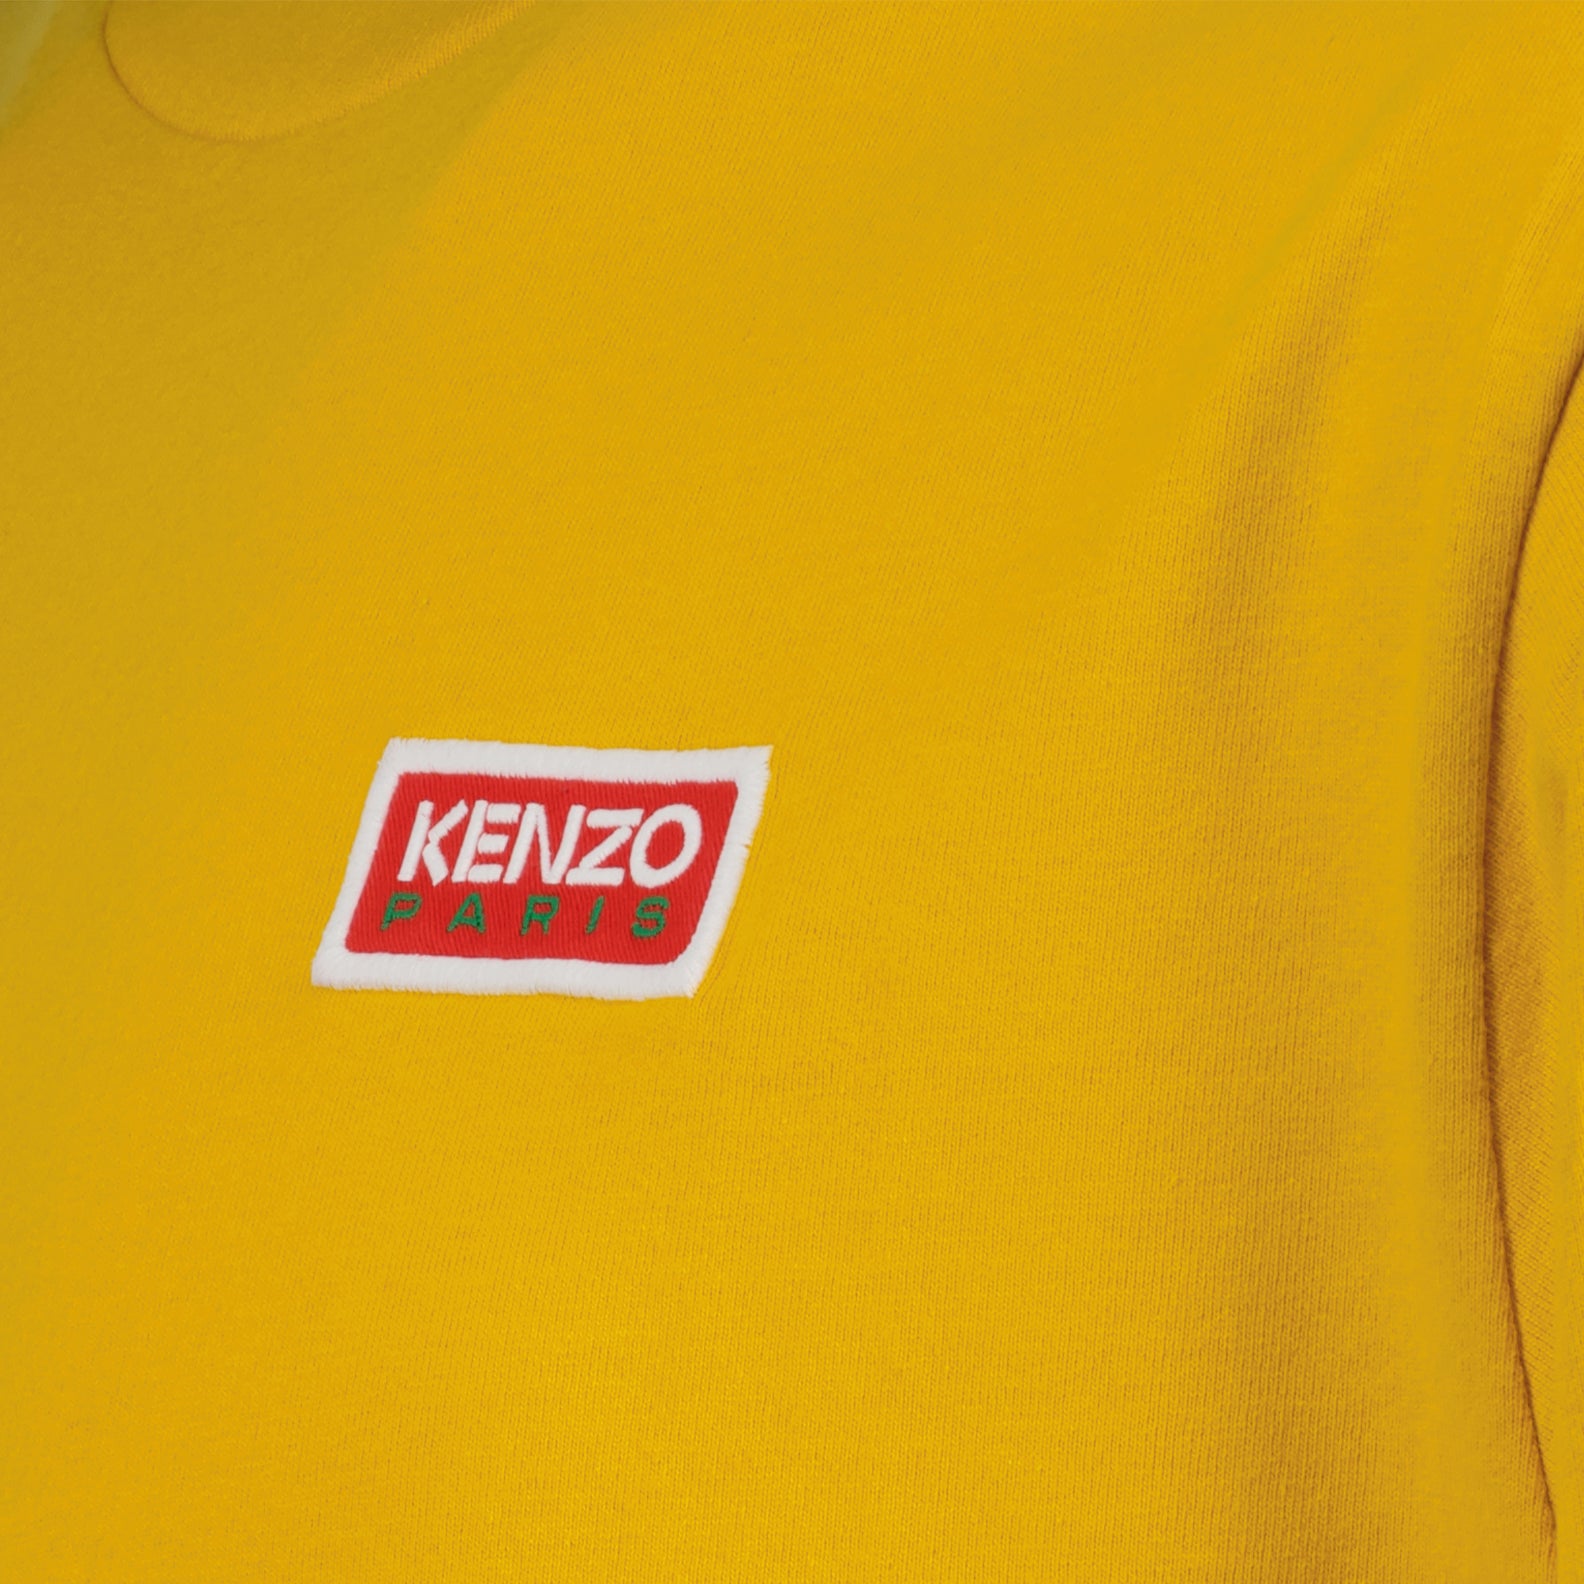 Kenzo Paris oversized t-shirt